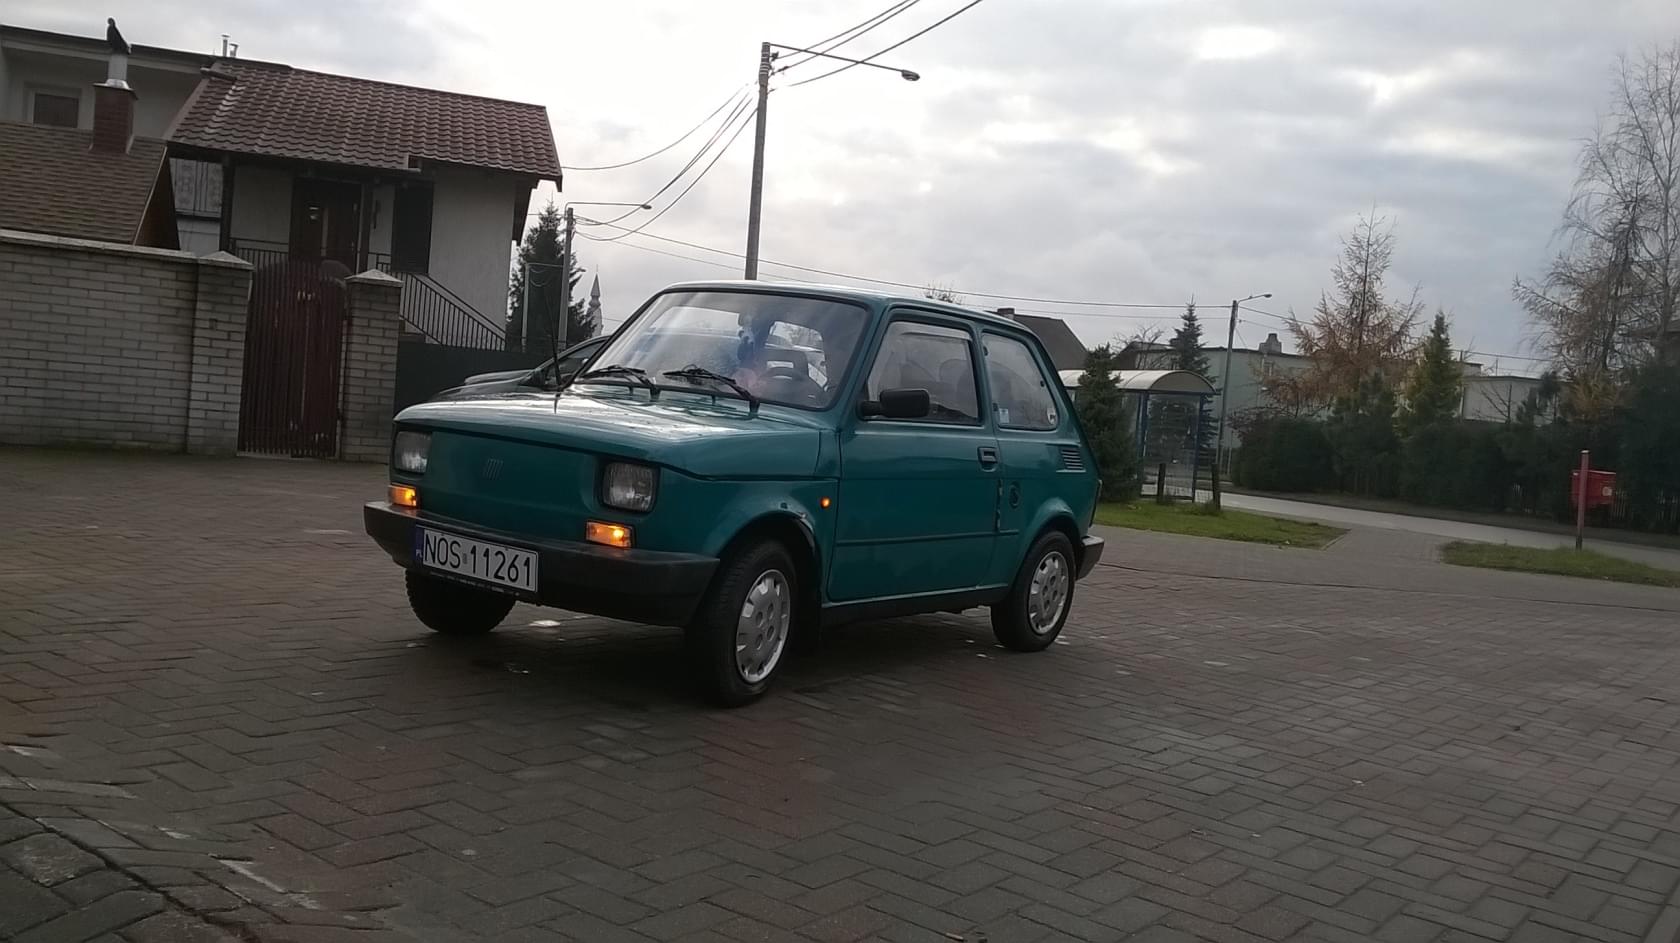 Zobacz temat Fiat 126 ELX Maluch Town '99